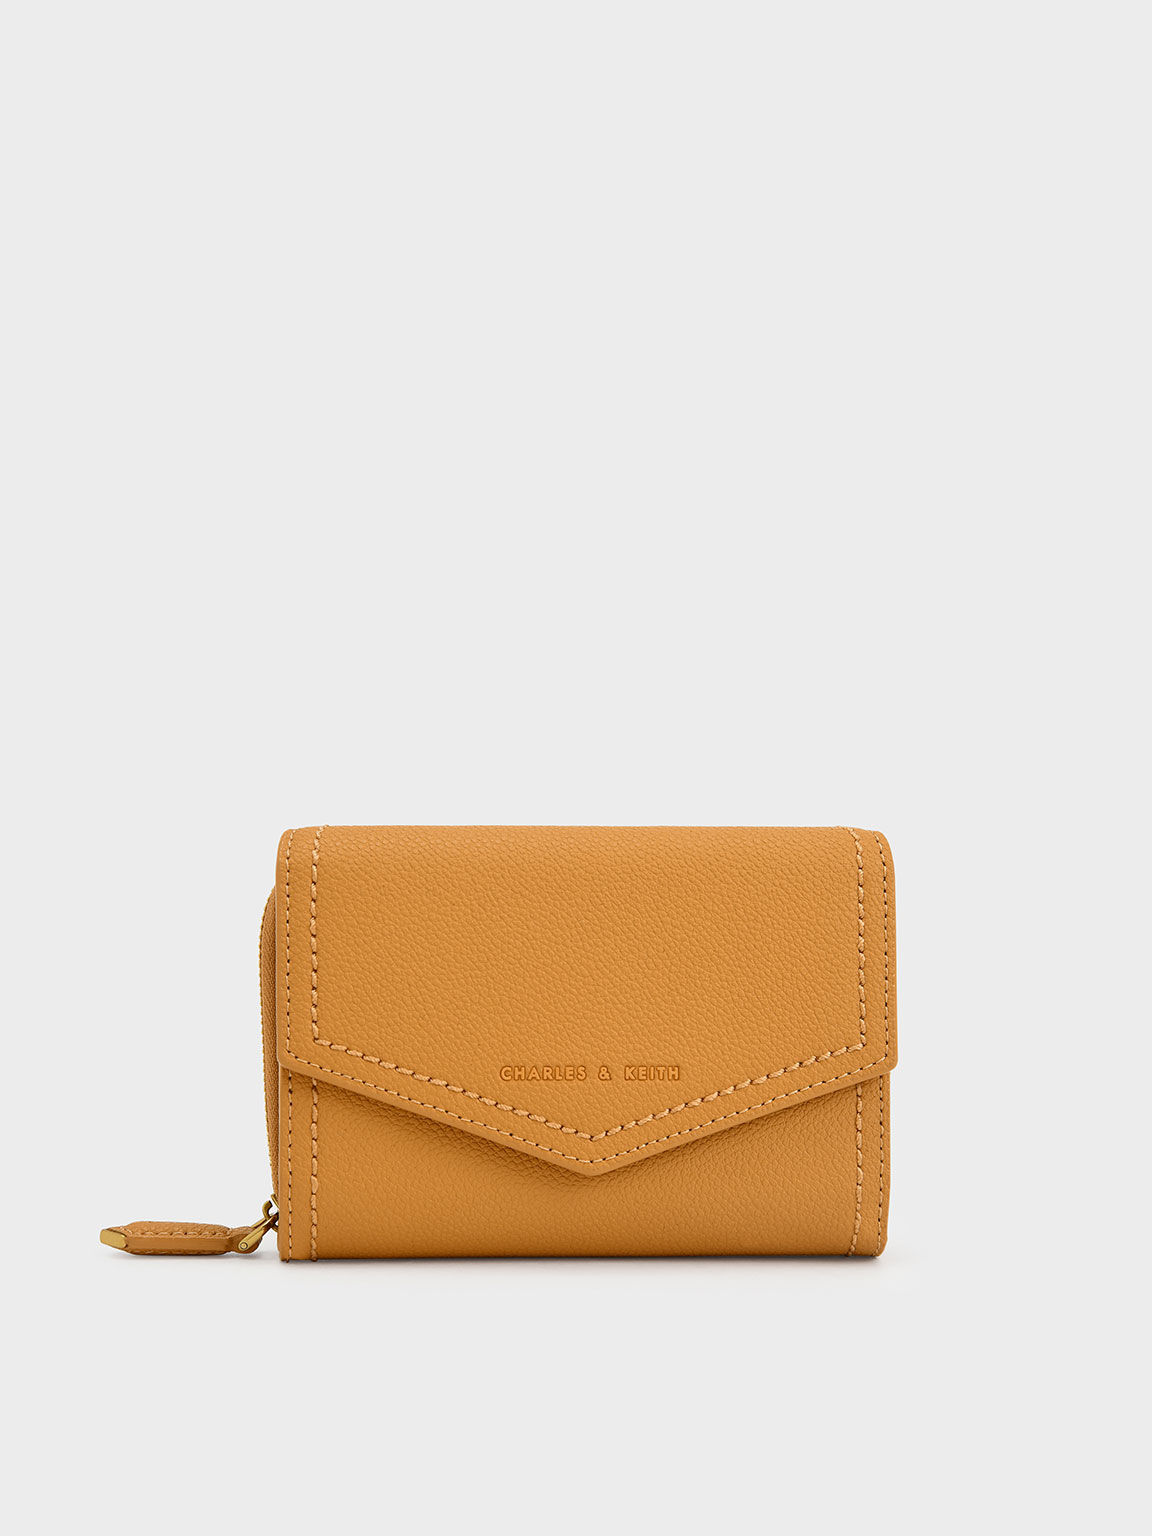 Michael Kors Envelope Wallet in Red Leather - Tabita Bags – Tabita Bags  with Love